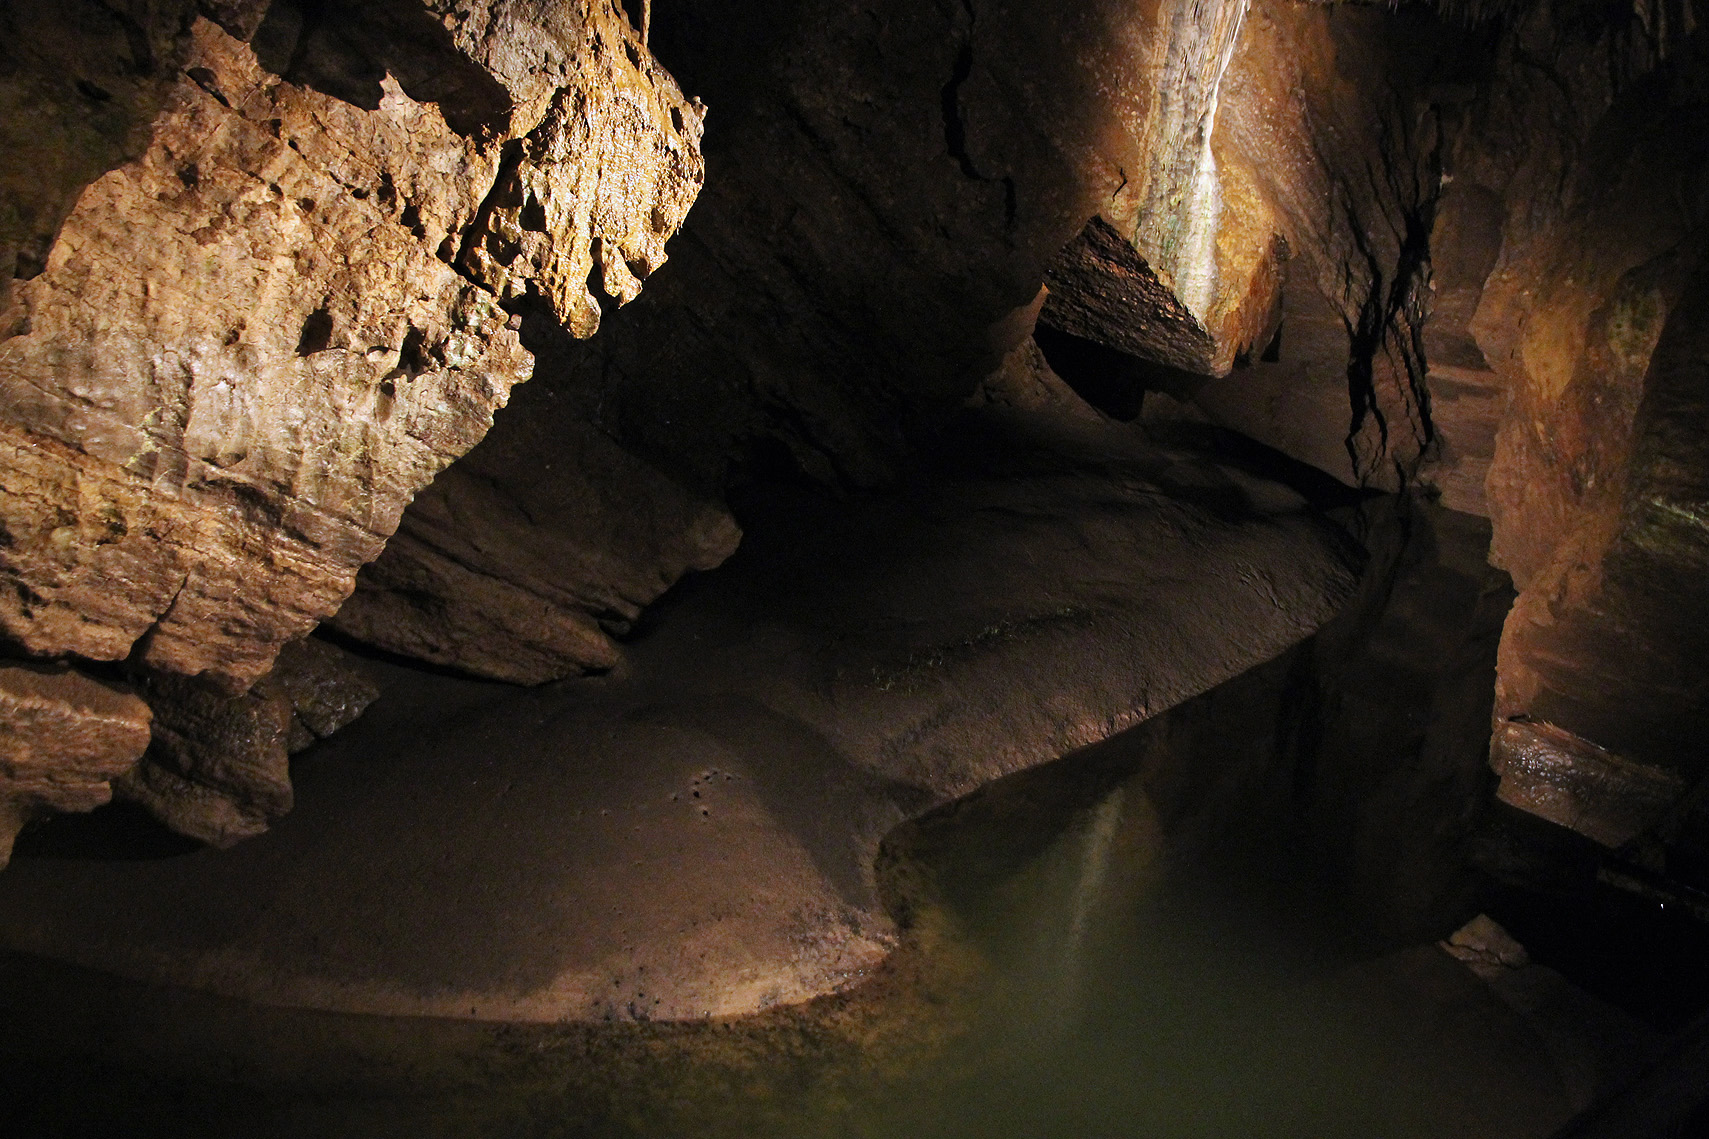 Subterranean part of the river Lesse.